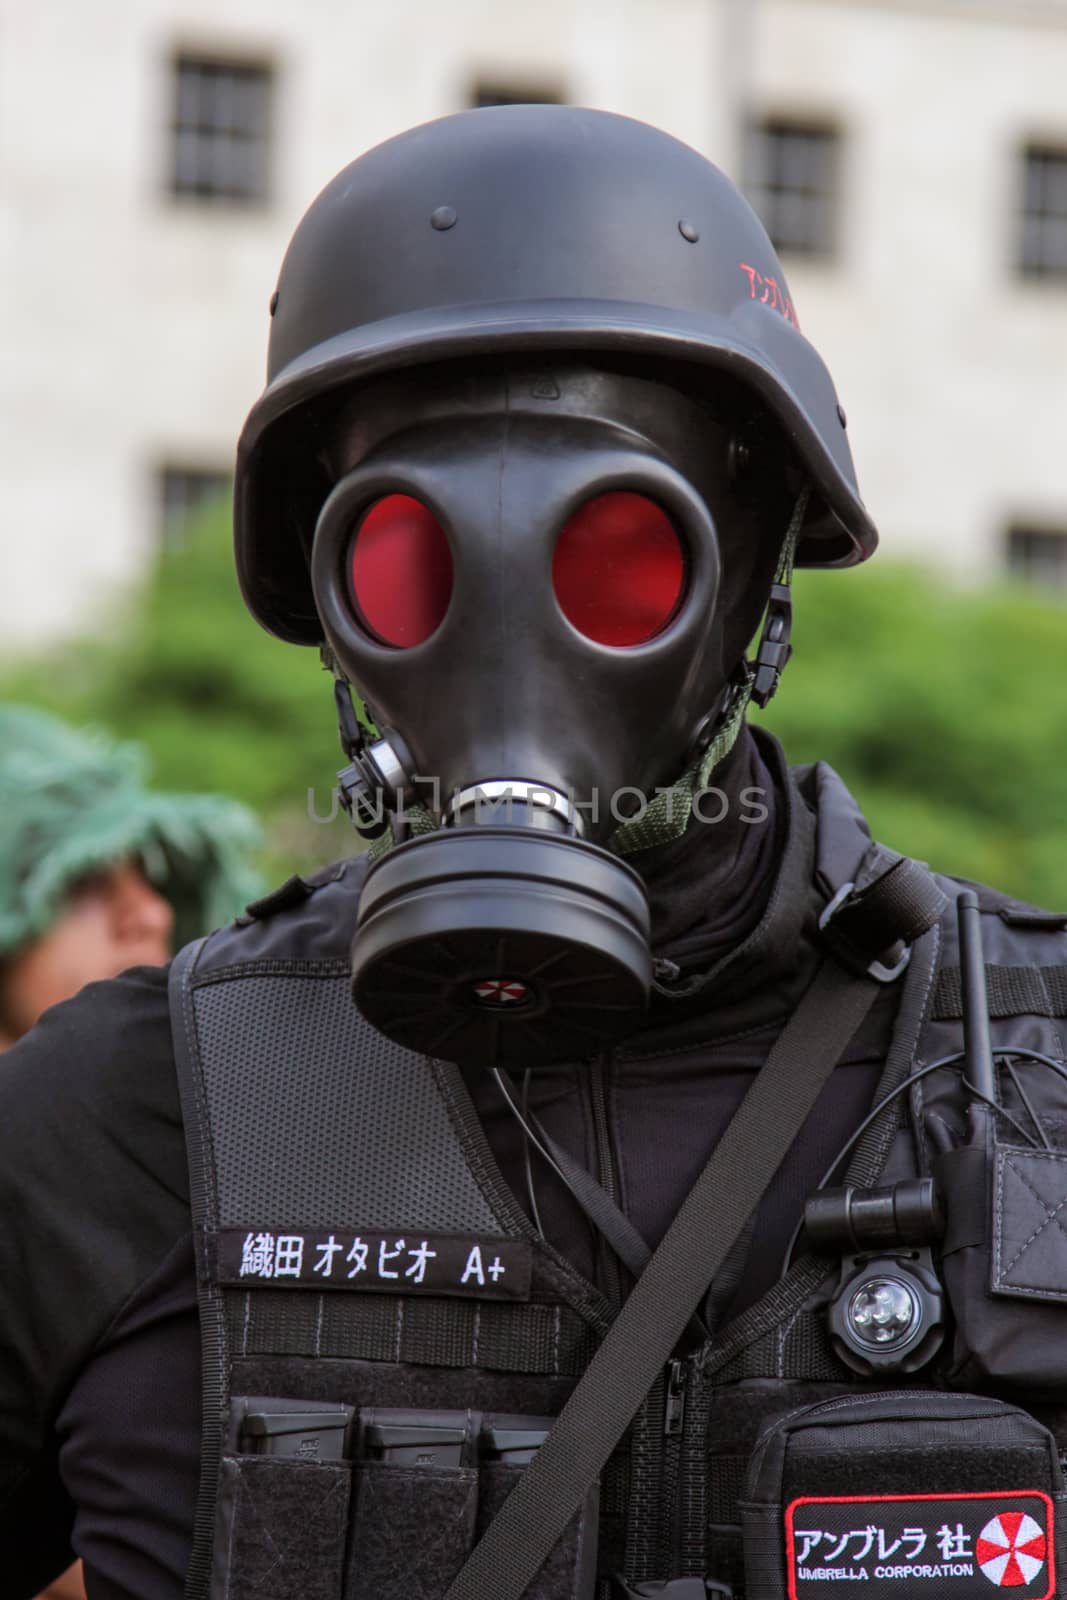 Sao Paulo, Brazil November 11 2015: An unidentified man in police costumes in the annual event Zombie Walk in Sao Paulo Brazil.